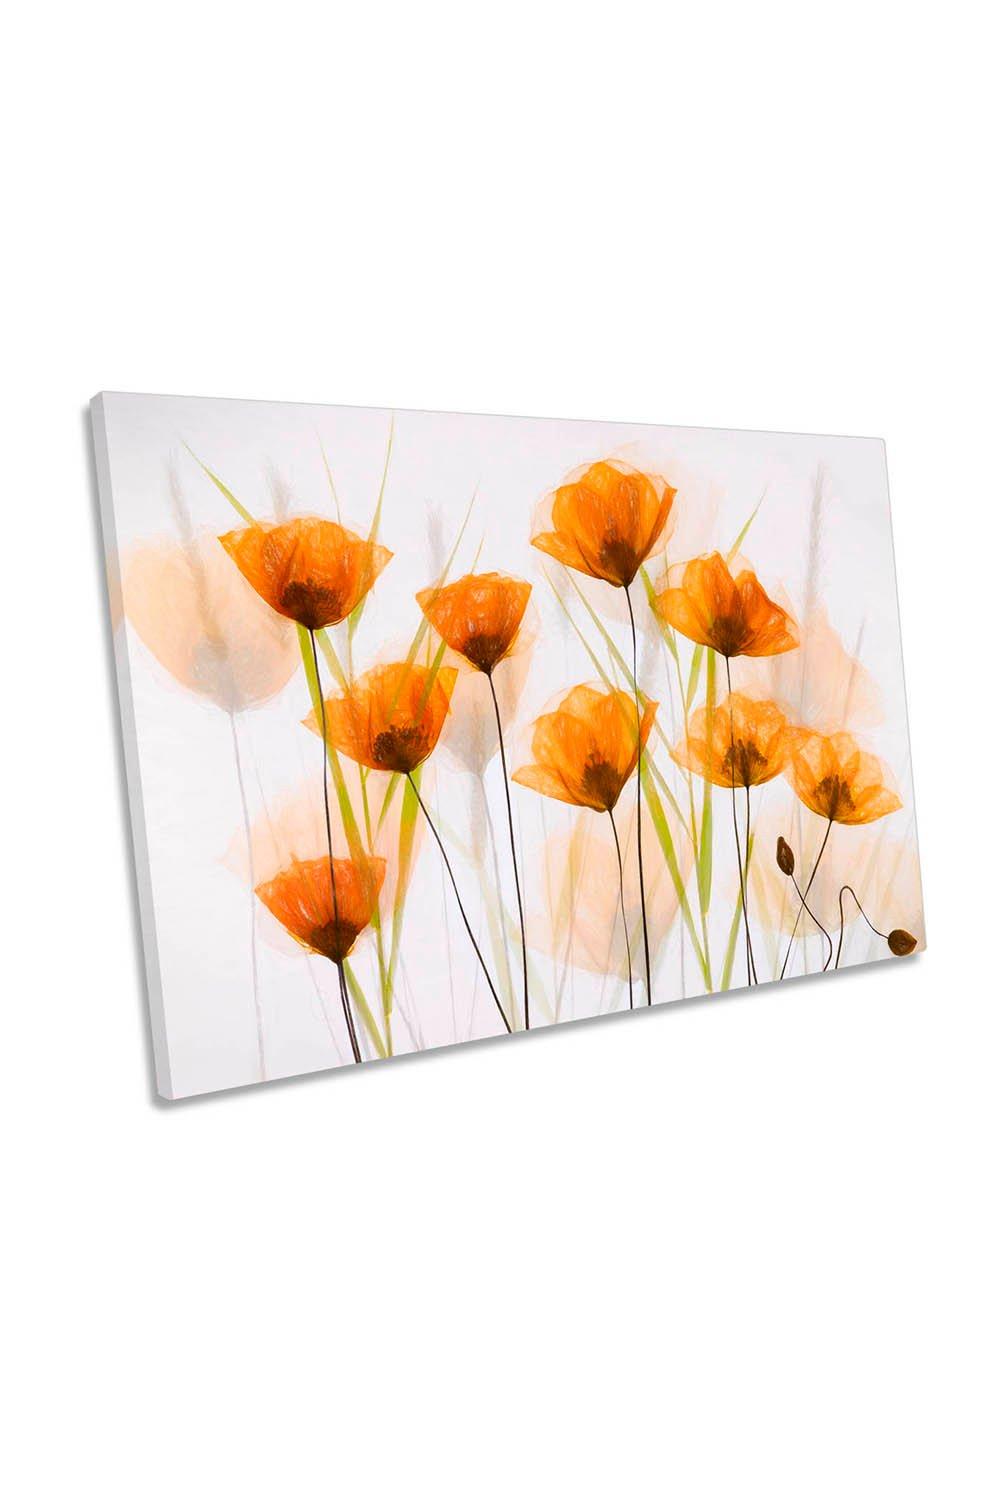 Poppy Flower Art Orange Petals Canvas Wall Art Picture Print